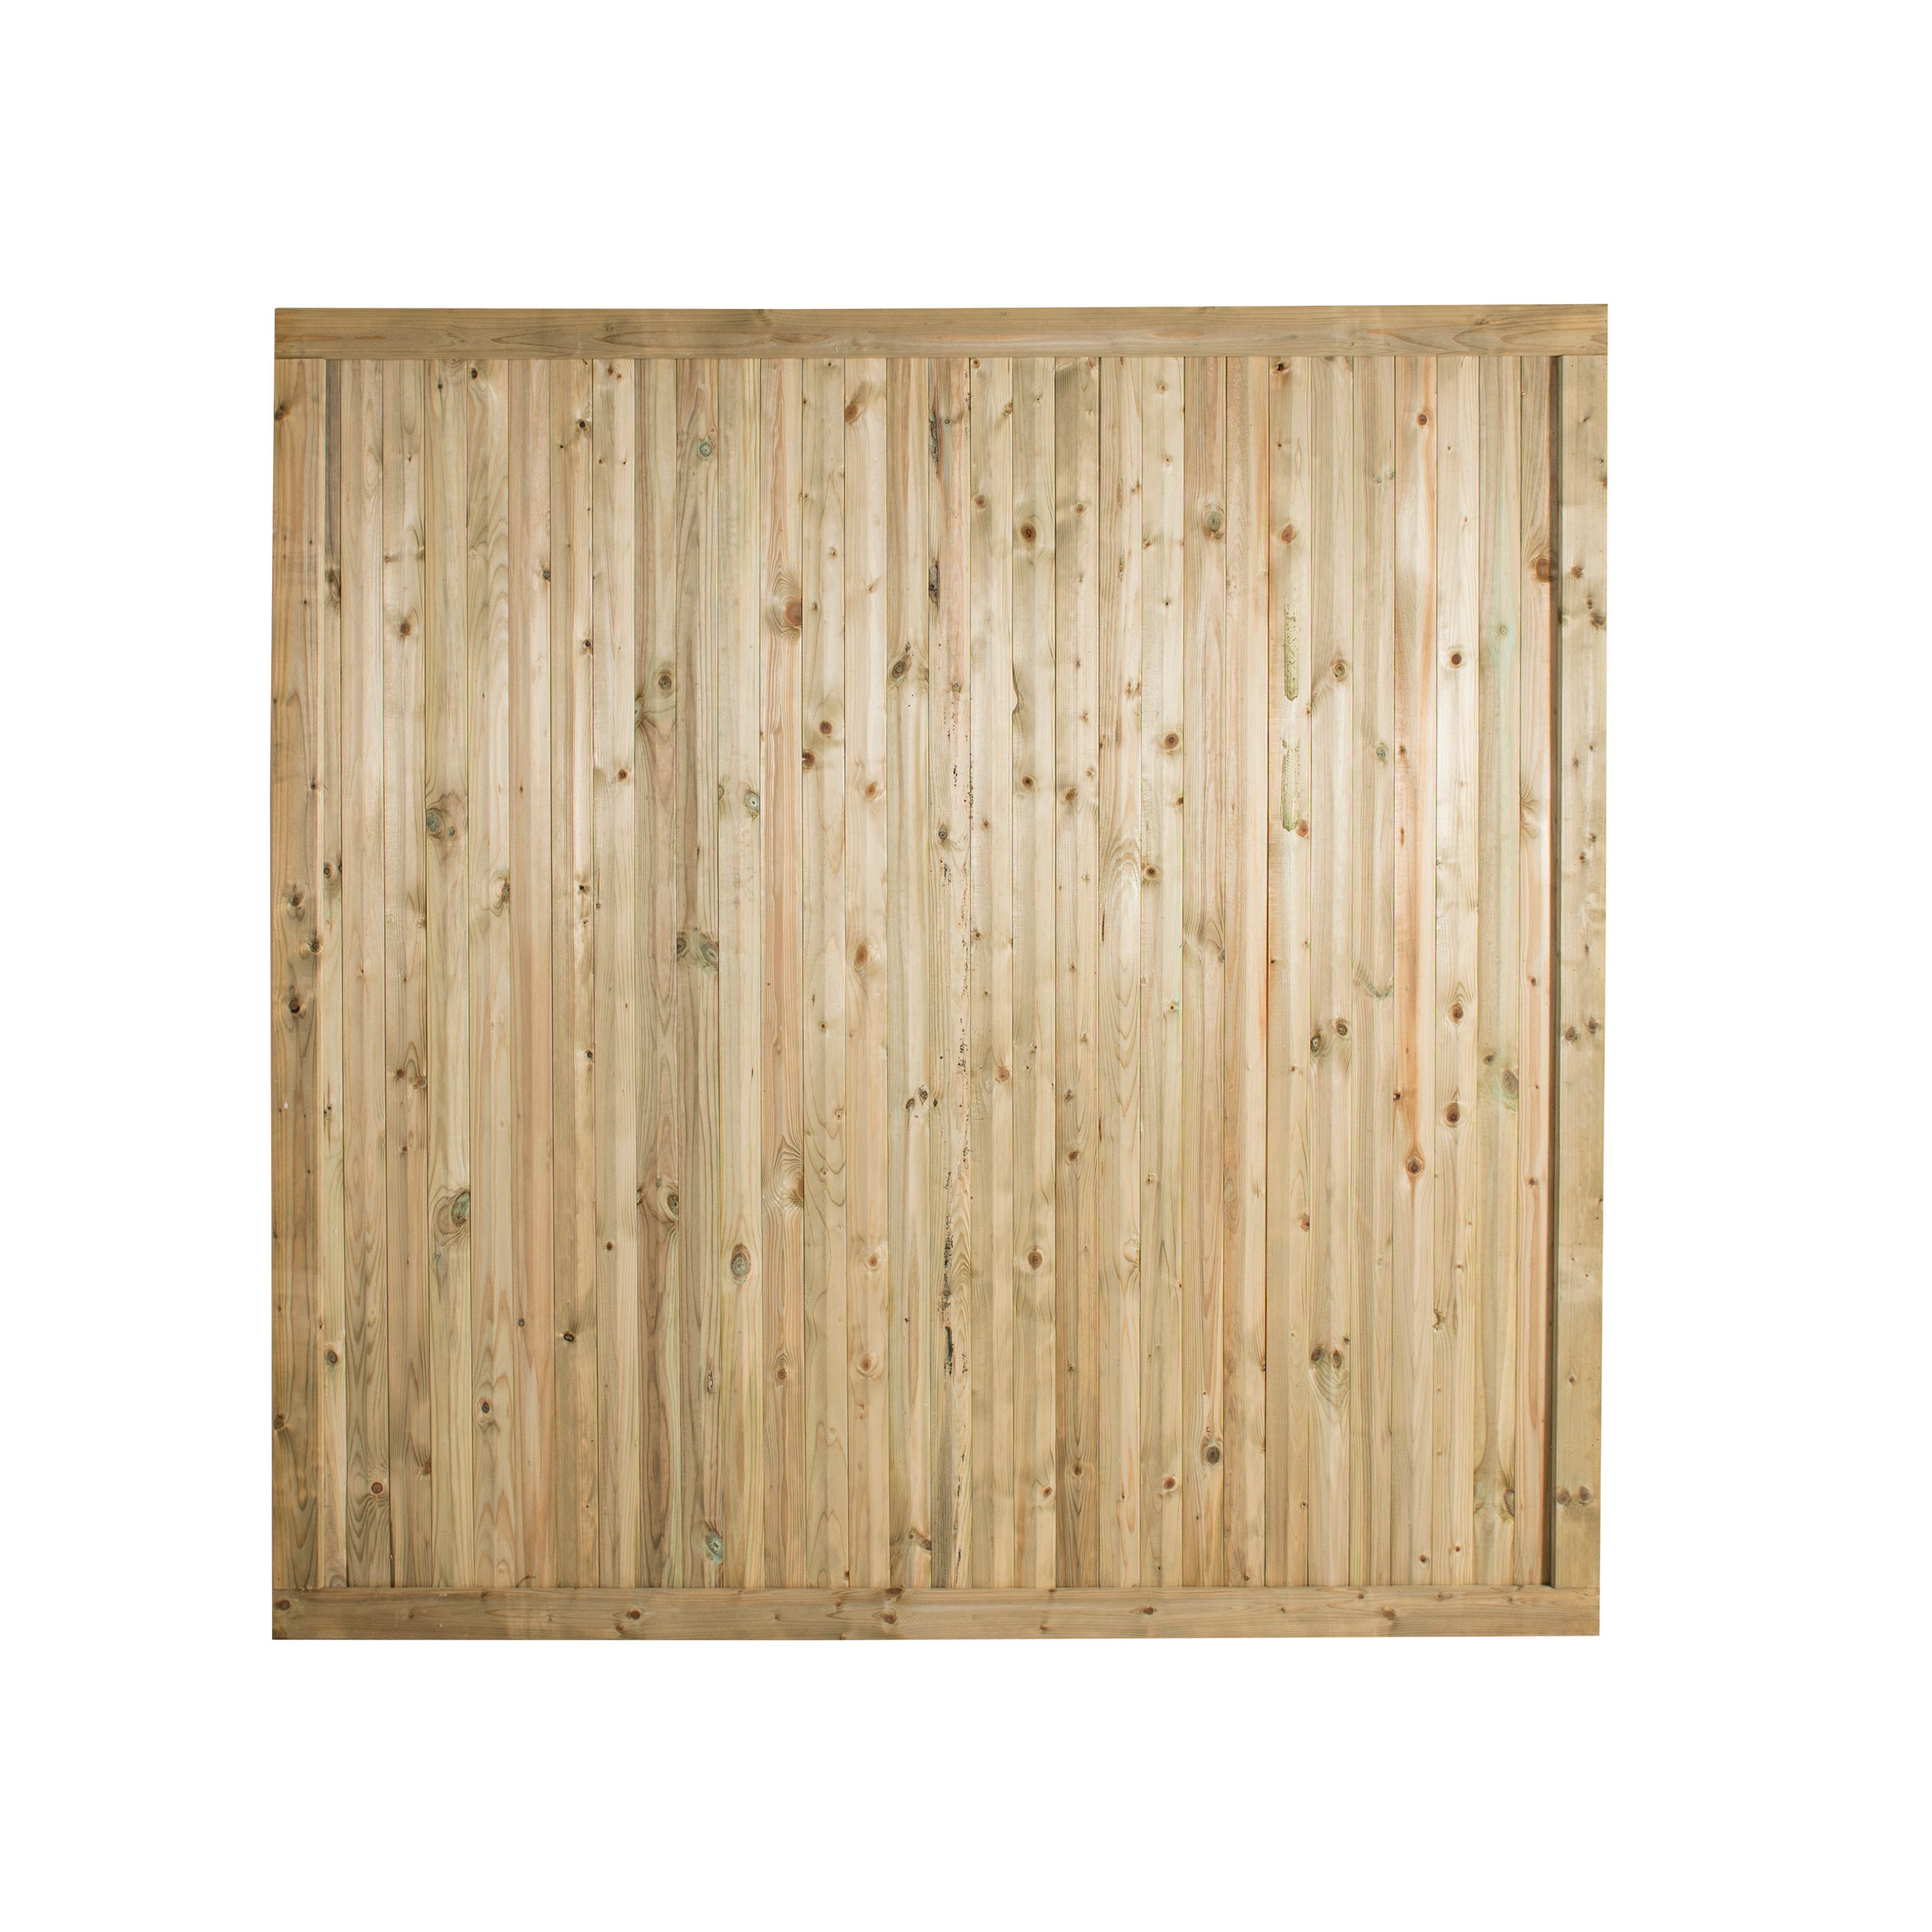 Forest Garden Decibel Closeboard Wooden Fence panel (W)1.83m (H)1.8m, Pack of 5